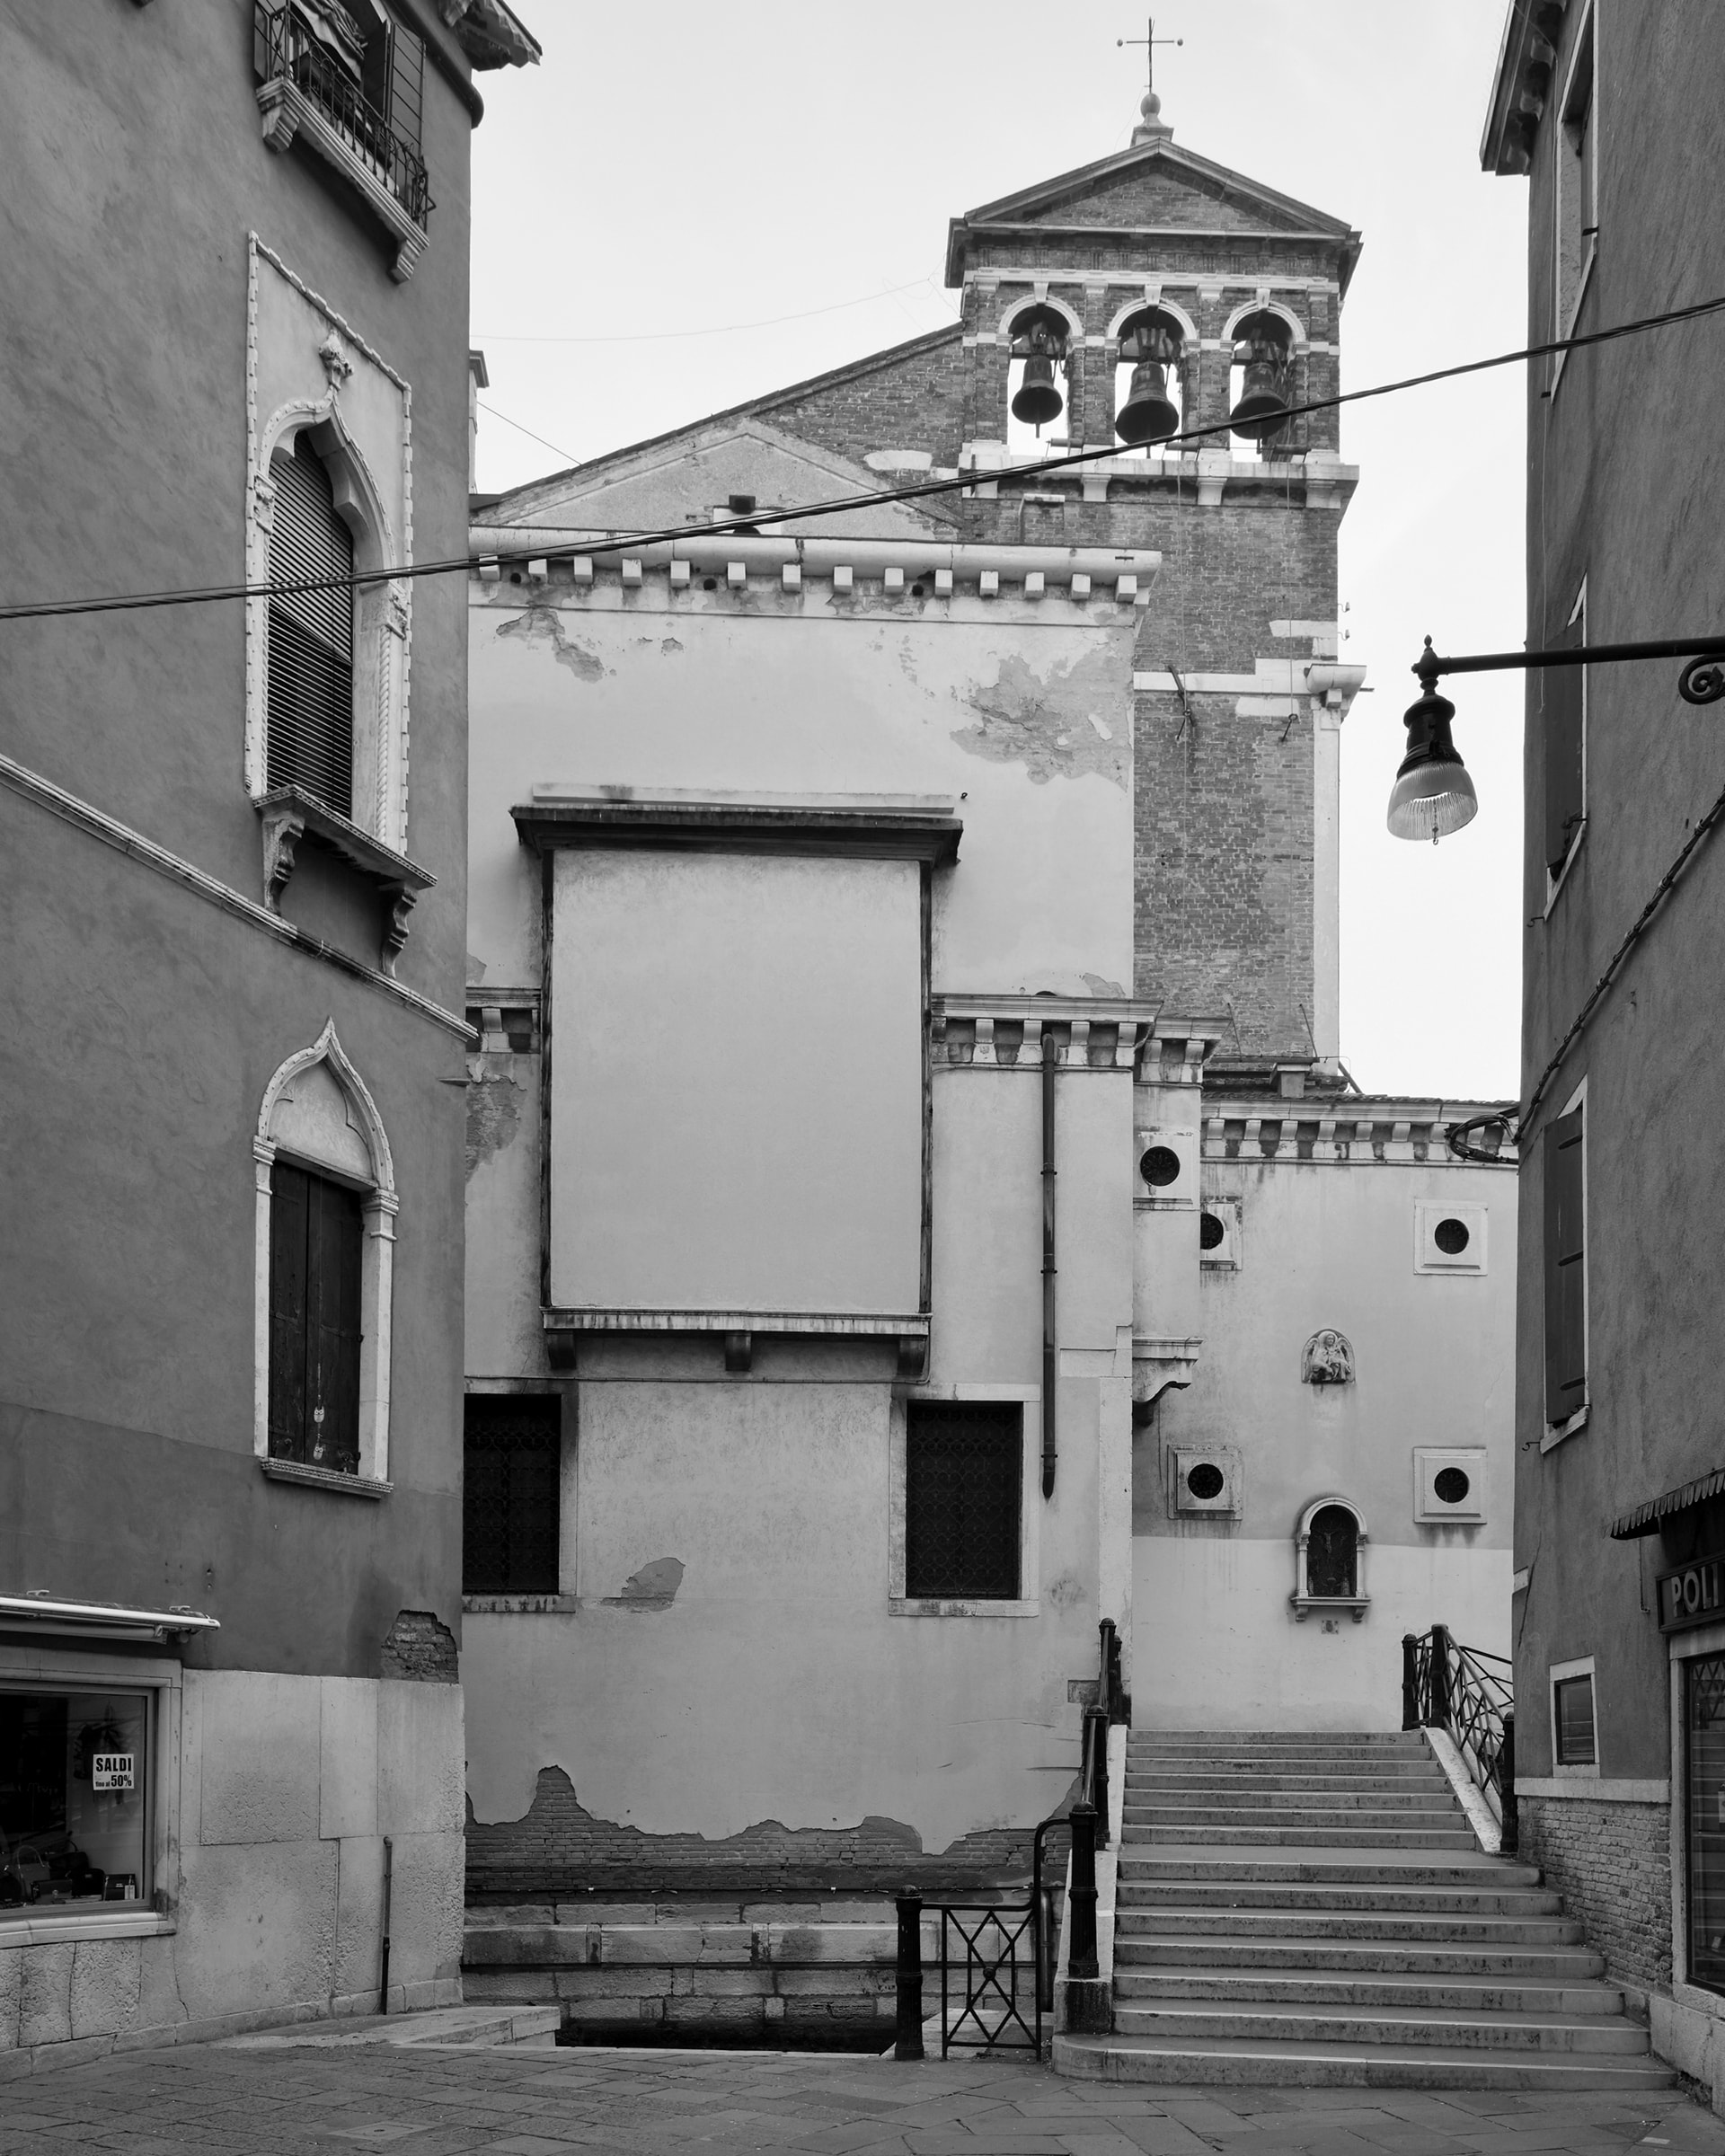 San Marco, Campiello de la Feltrina, 2019. Venice Urban Photo Project / Mario Peliti